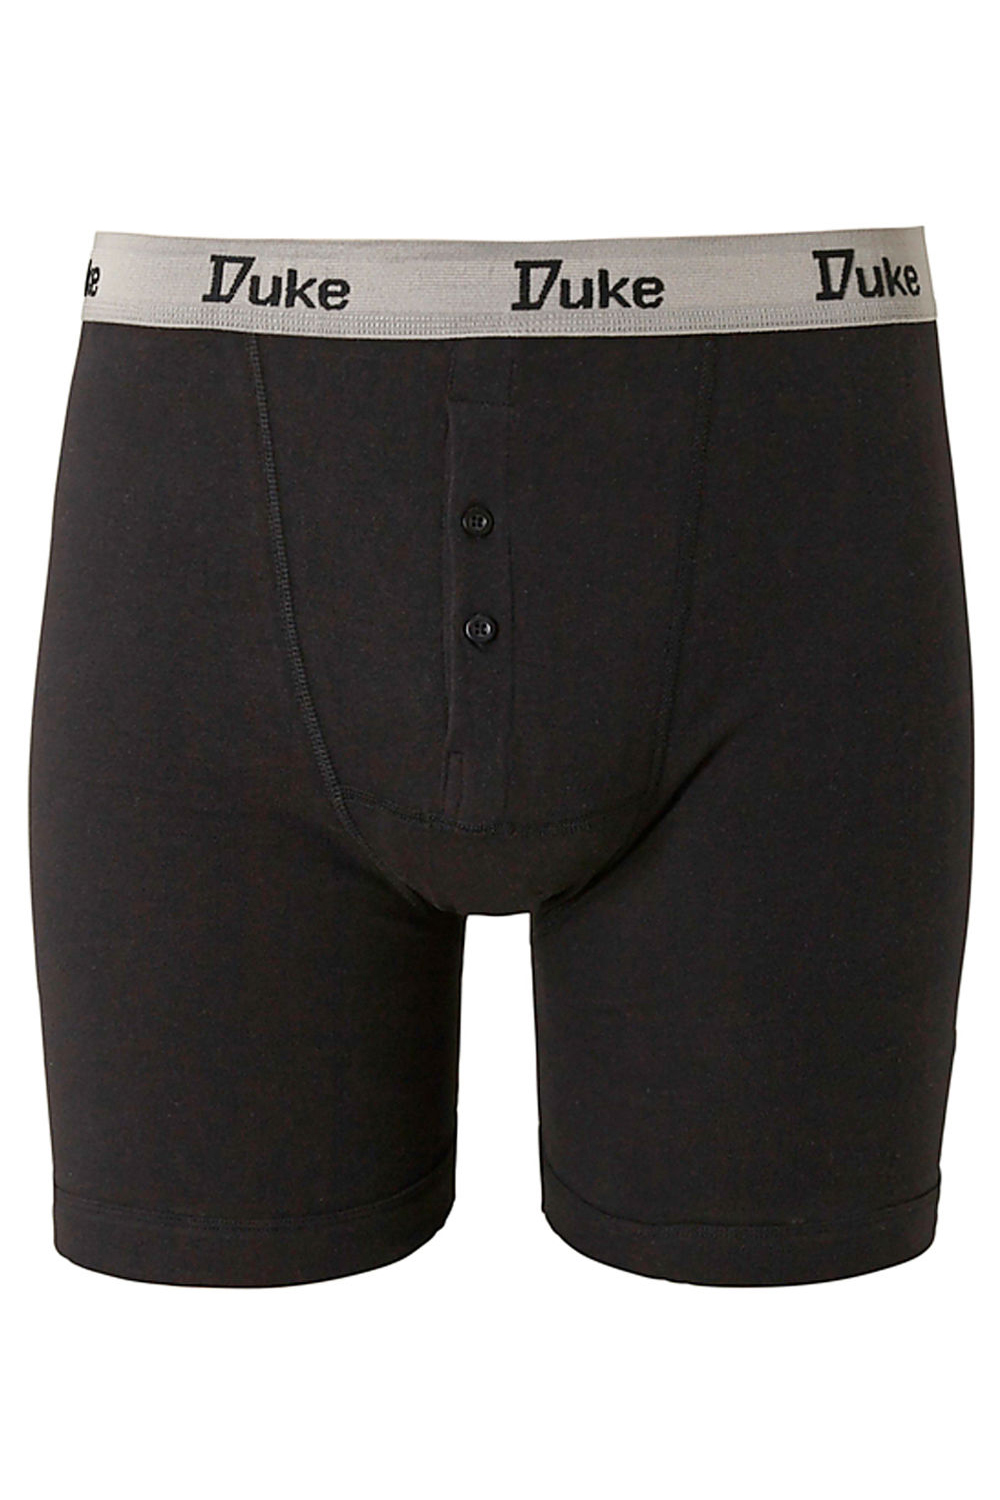 Duke London Mens 3 Pack Cotton Boxer Shorts Button Fly Underwear Trunks ...